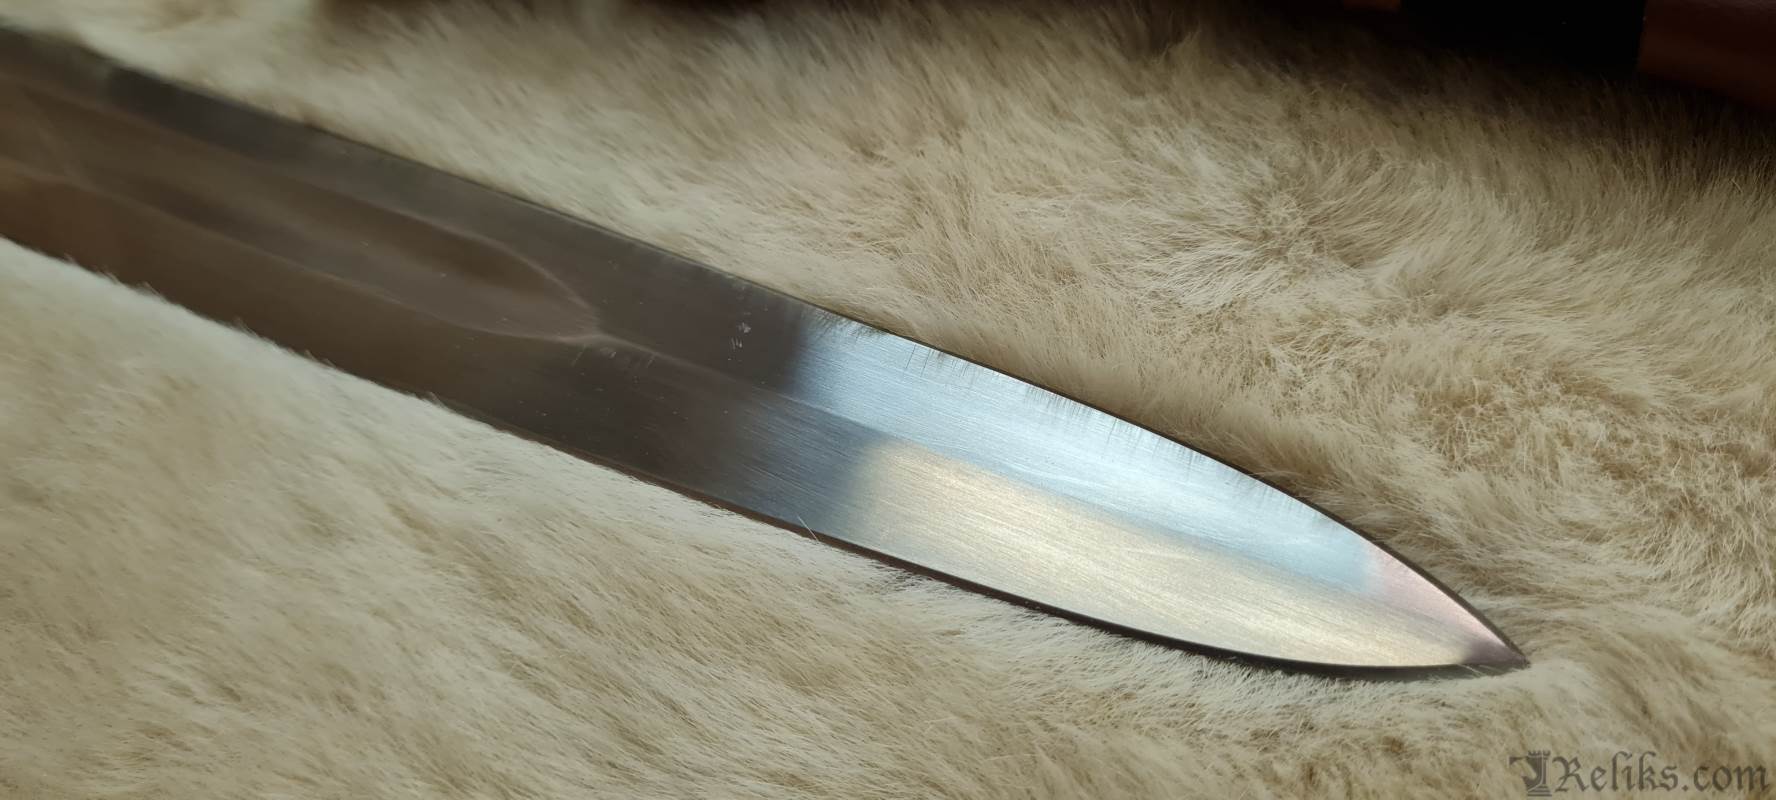 baldur viking blade